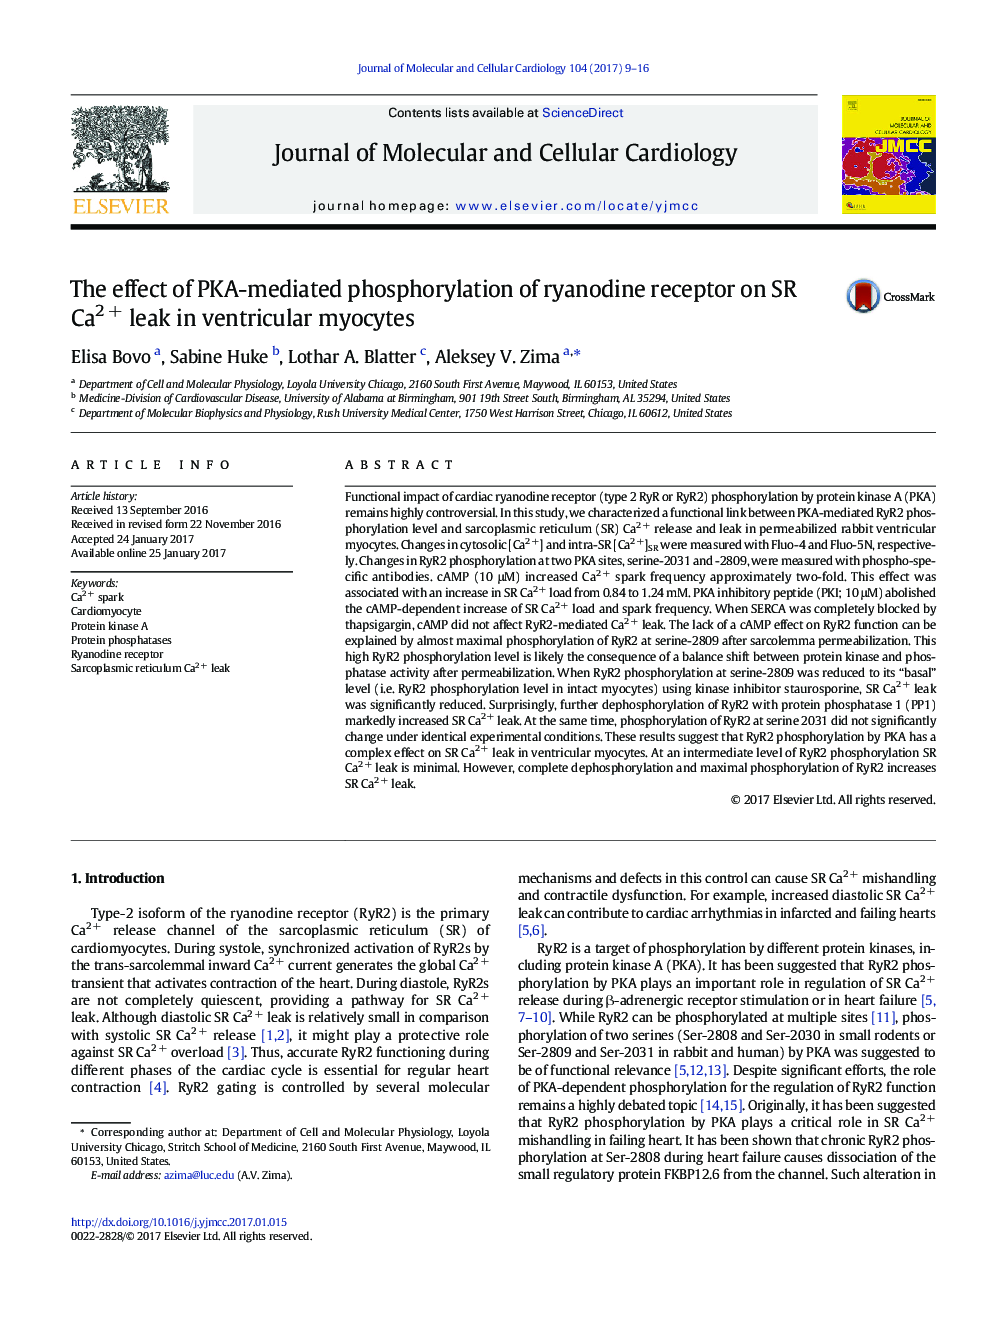 The effect of PKA-mediated phosphorylation of ryanodine receptor on SR Ca2Â + leak in ventricular myocytes